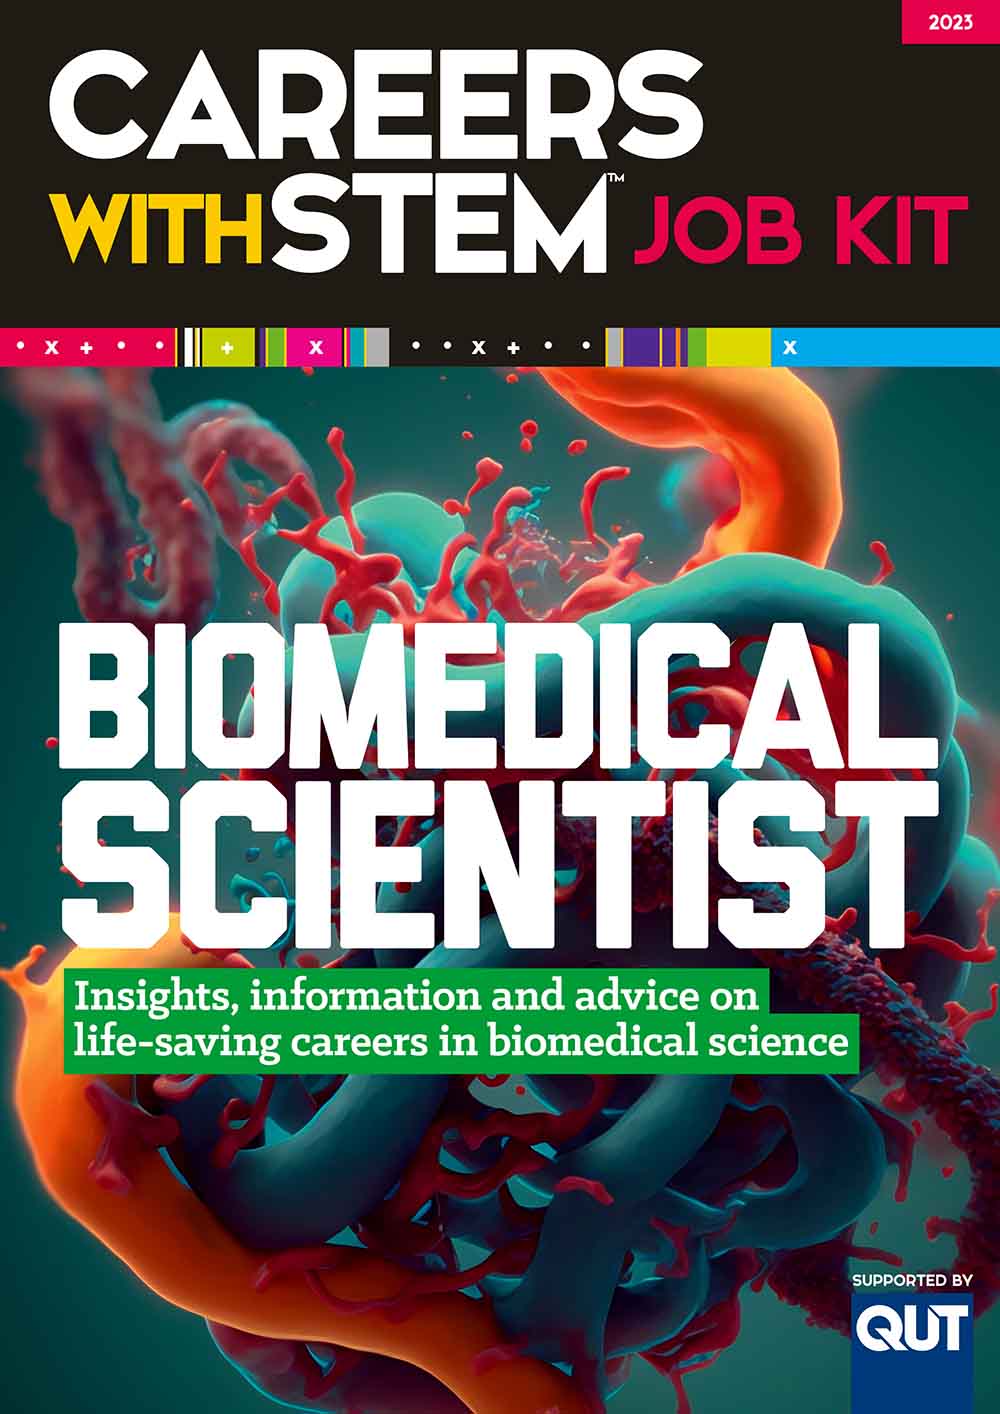 Brochure cover of the Biomedical Scientist Job Kit